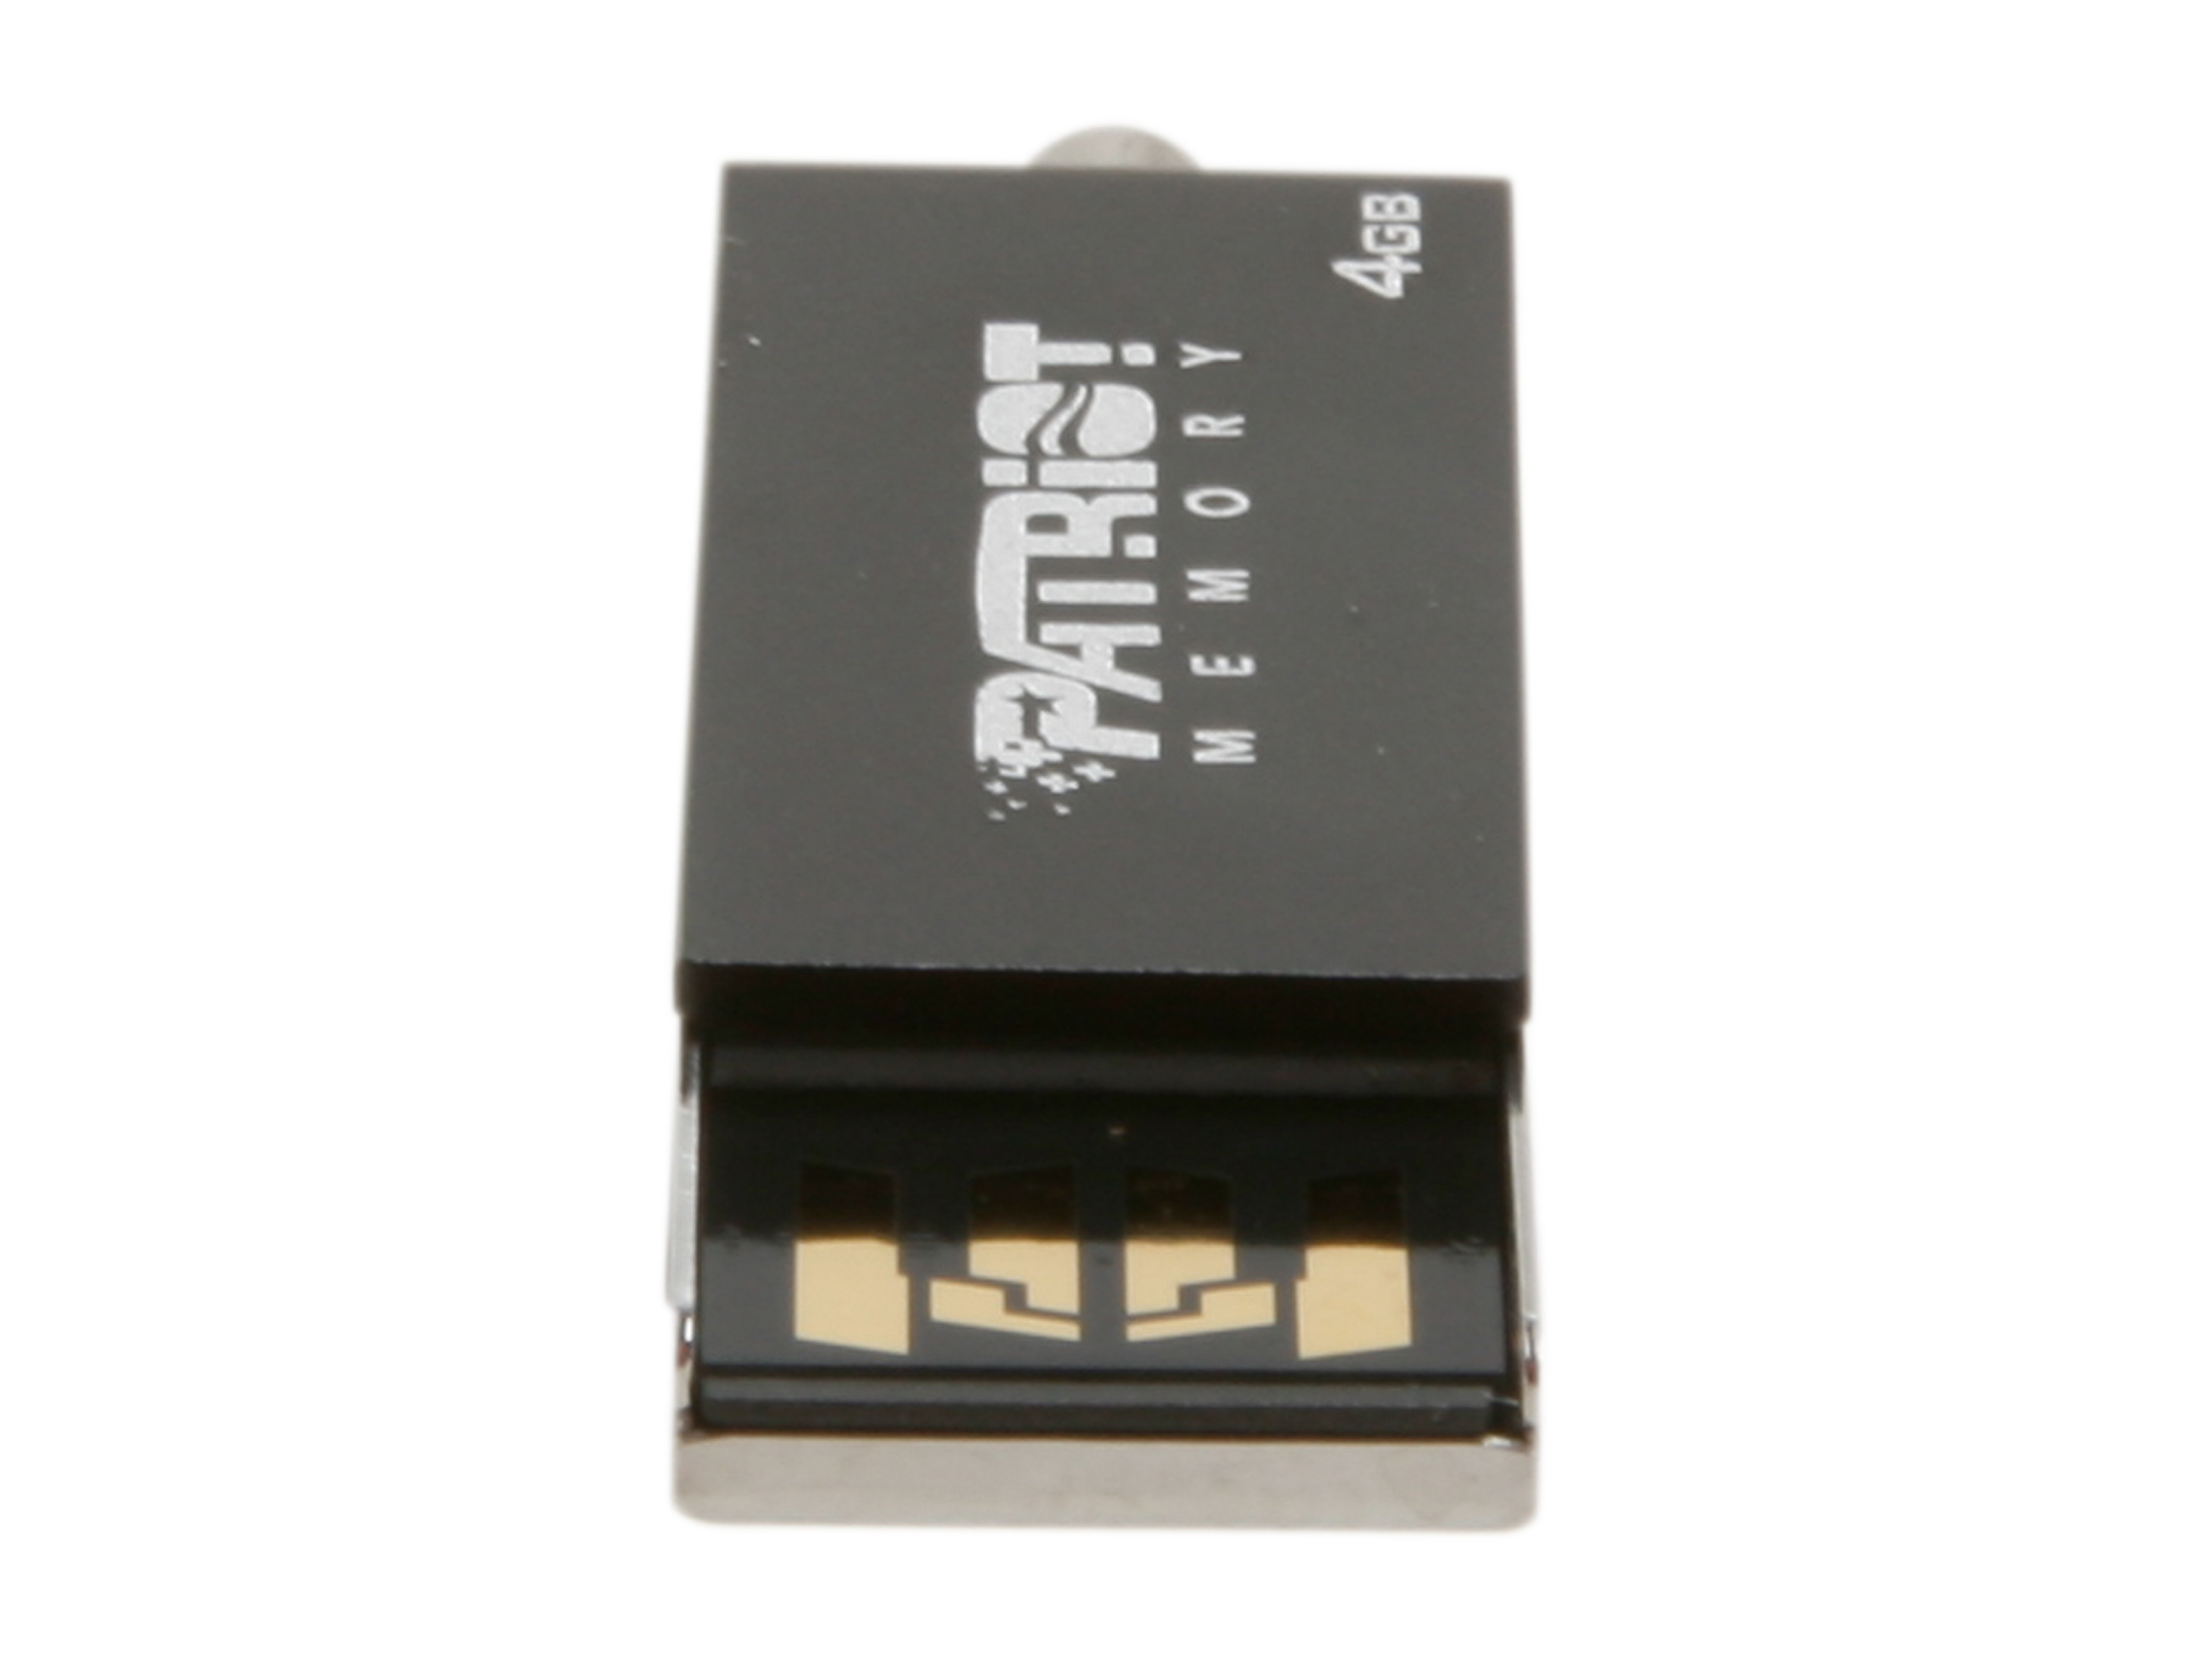 Patriot Swing 4GB USB 2.0 Flash Drive (Black) Model PSF4GSBUSB